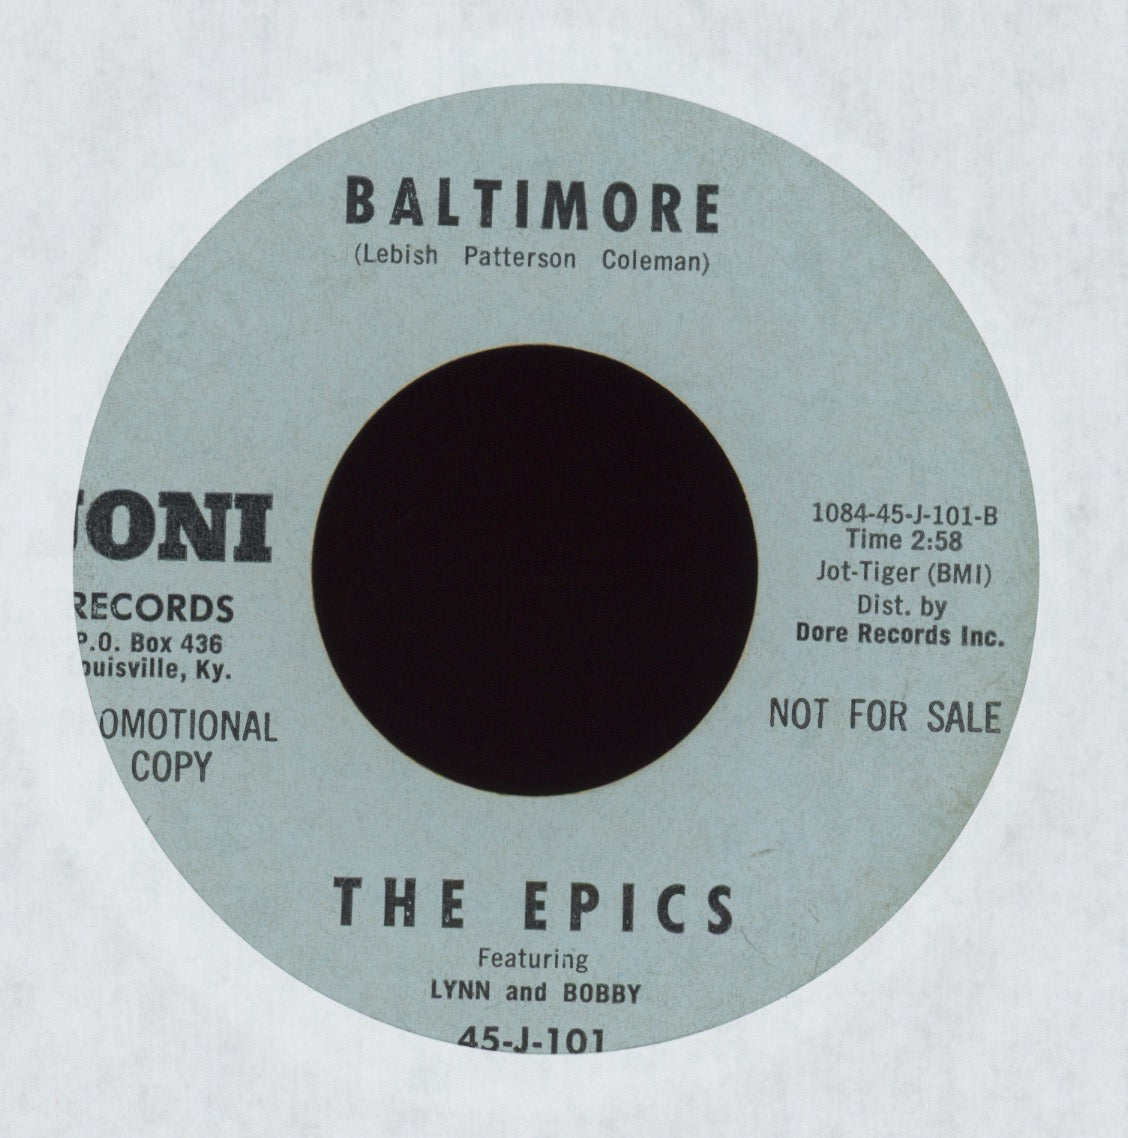 Janie Moss and The Epics - Baltimore on Joni Promo